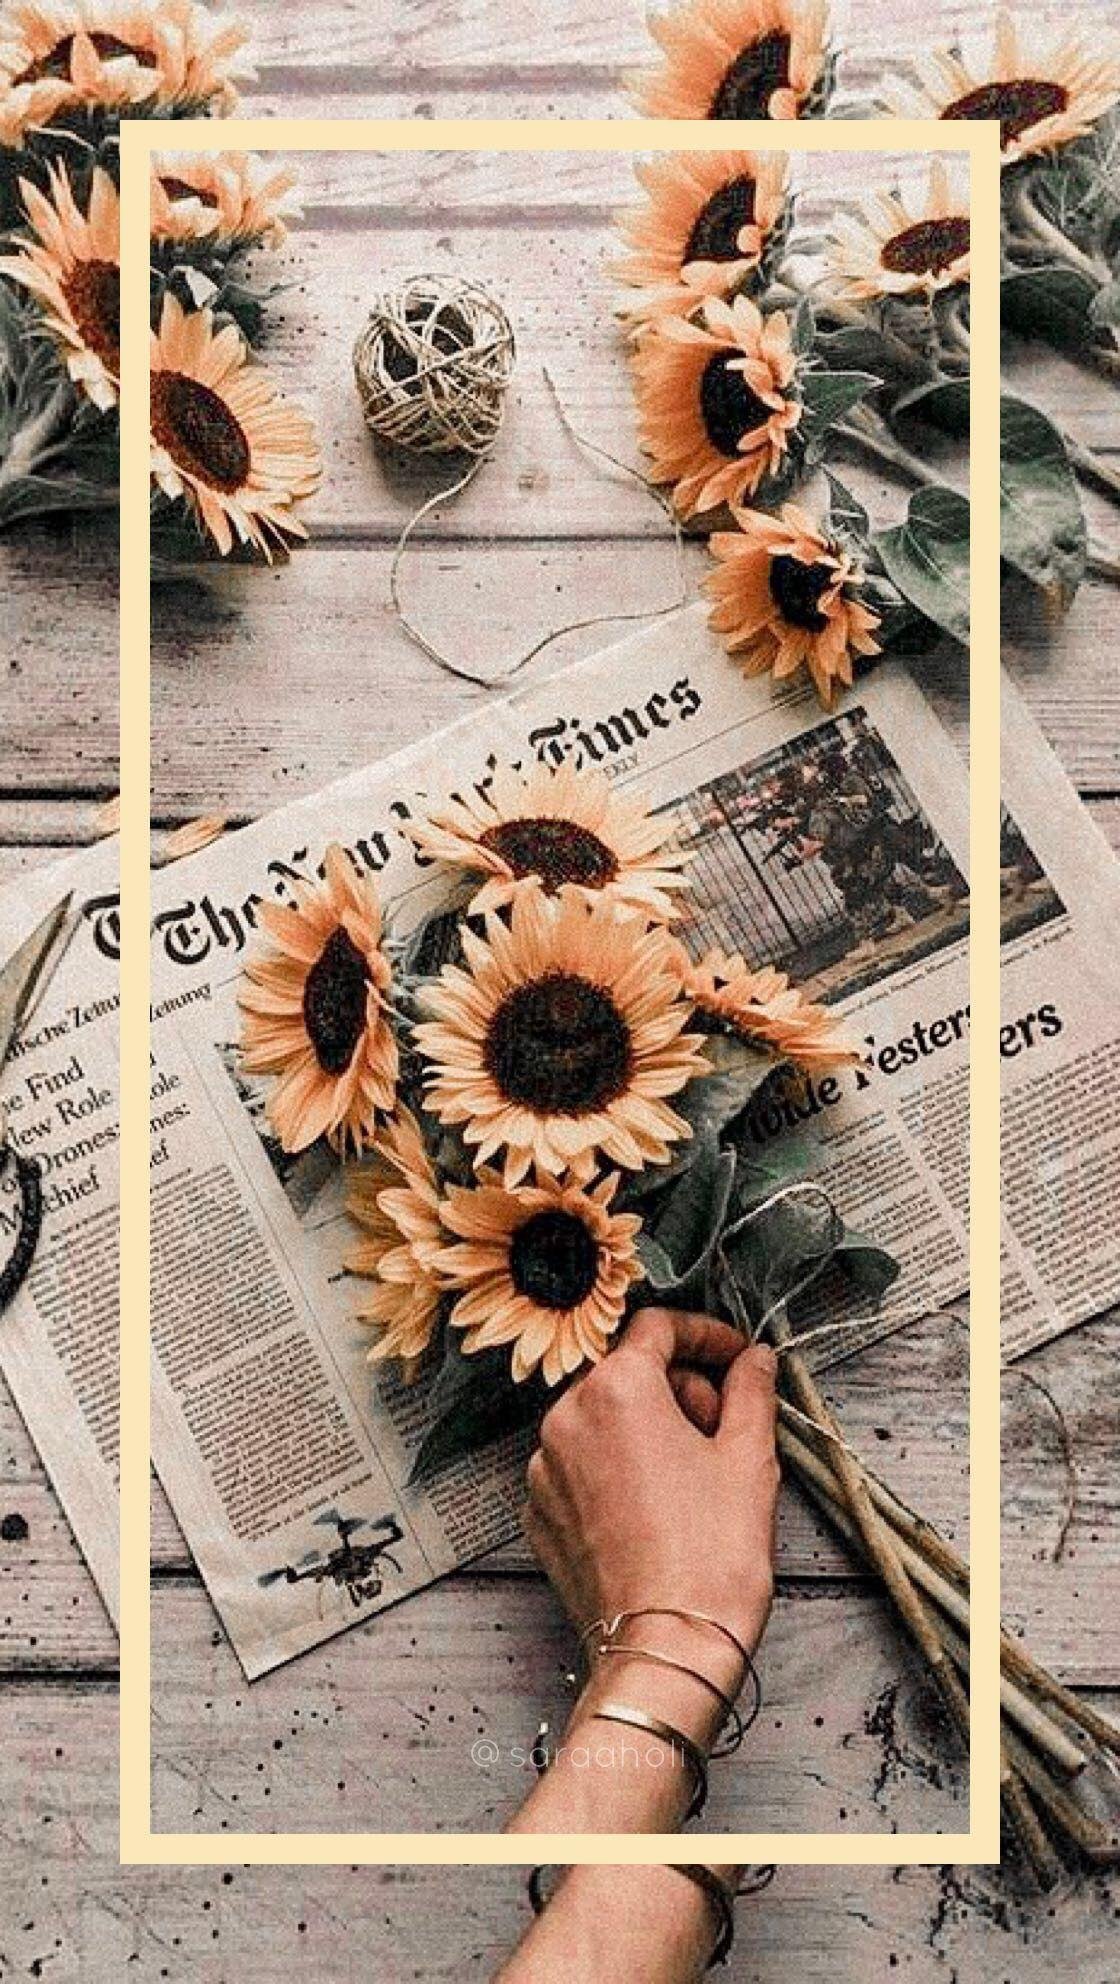 Sunflower Wallpaper Images  Free Download on Freepik